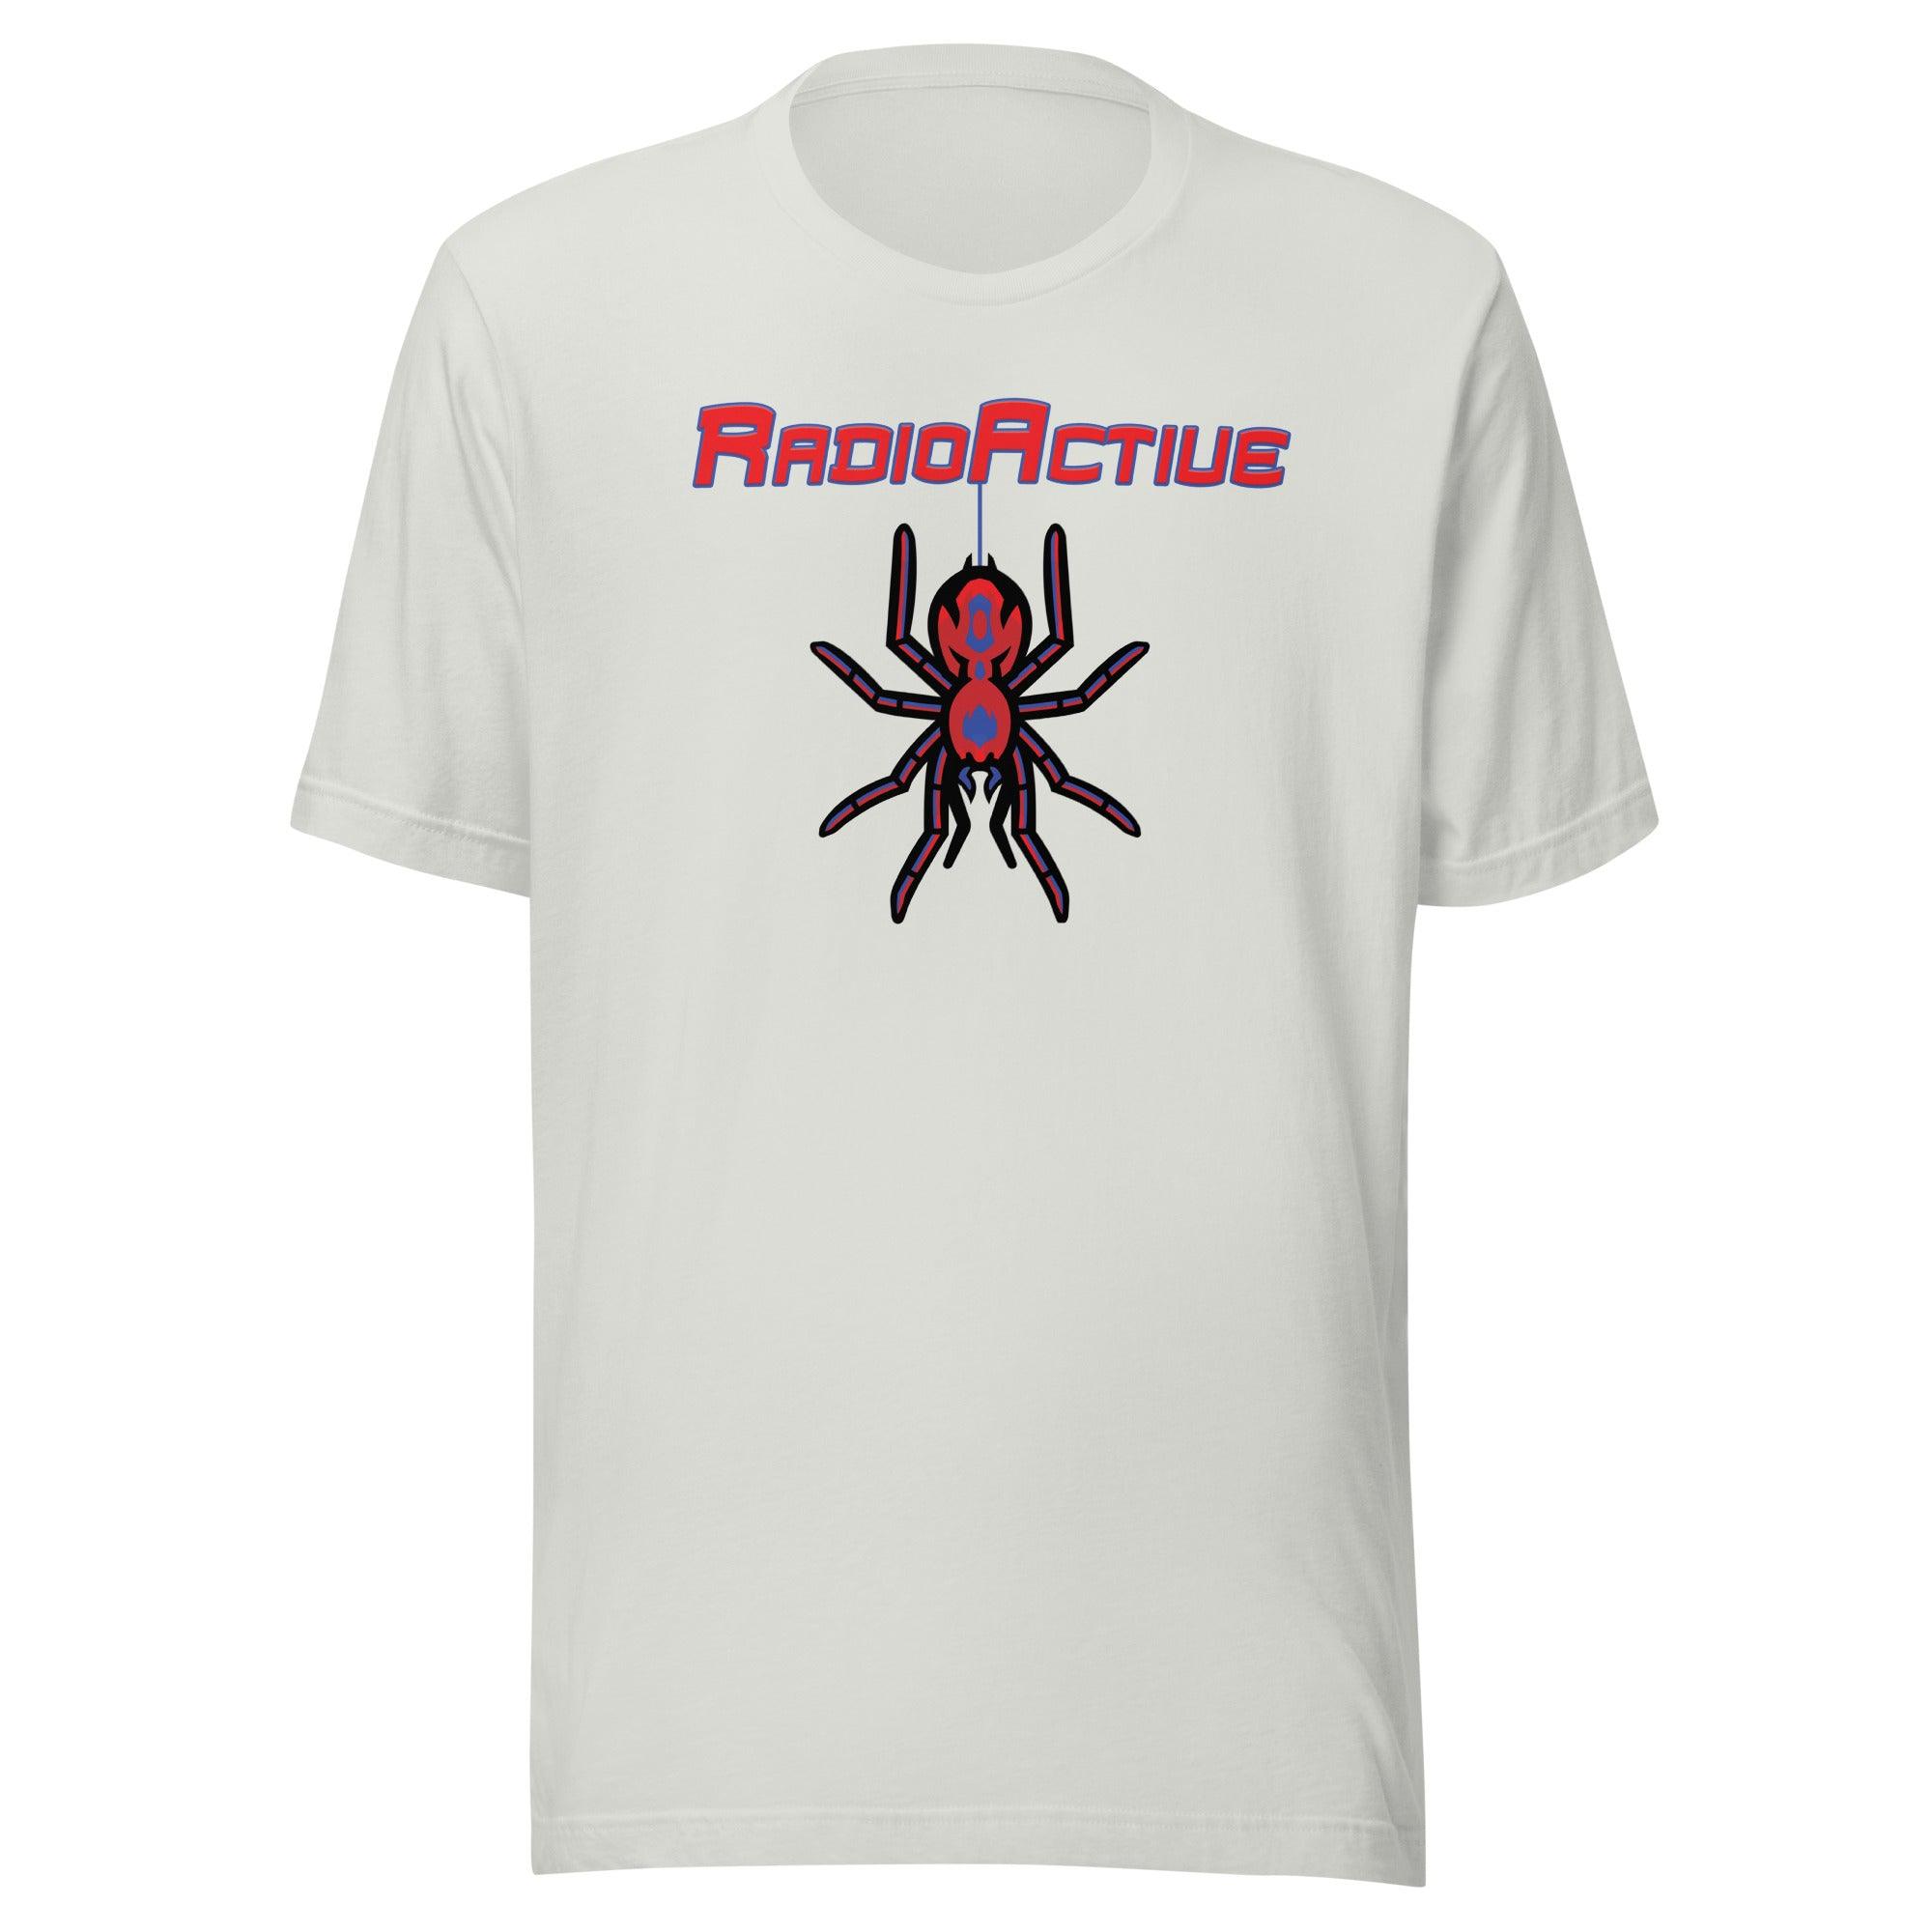 RadioActive! Unisex t-shirt